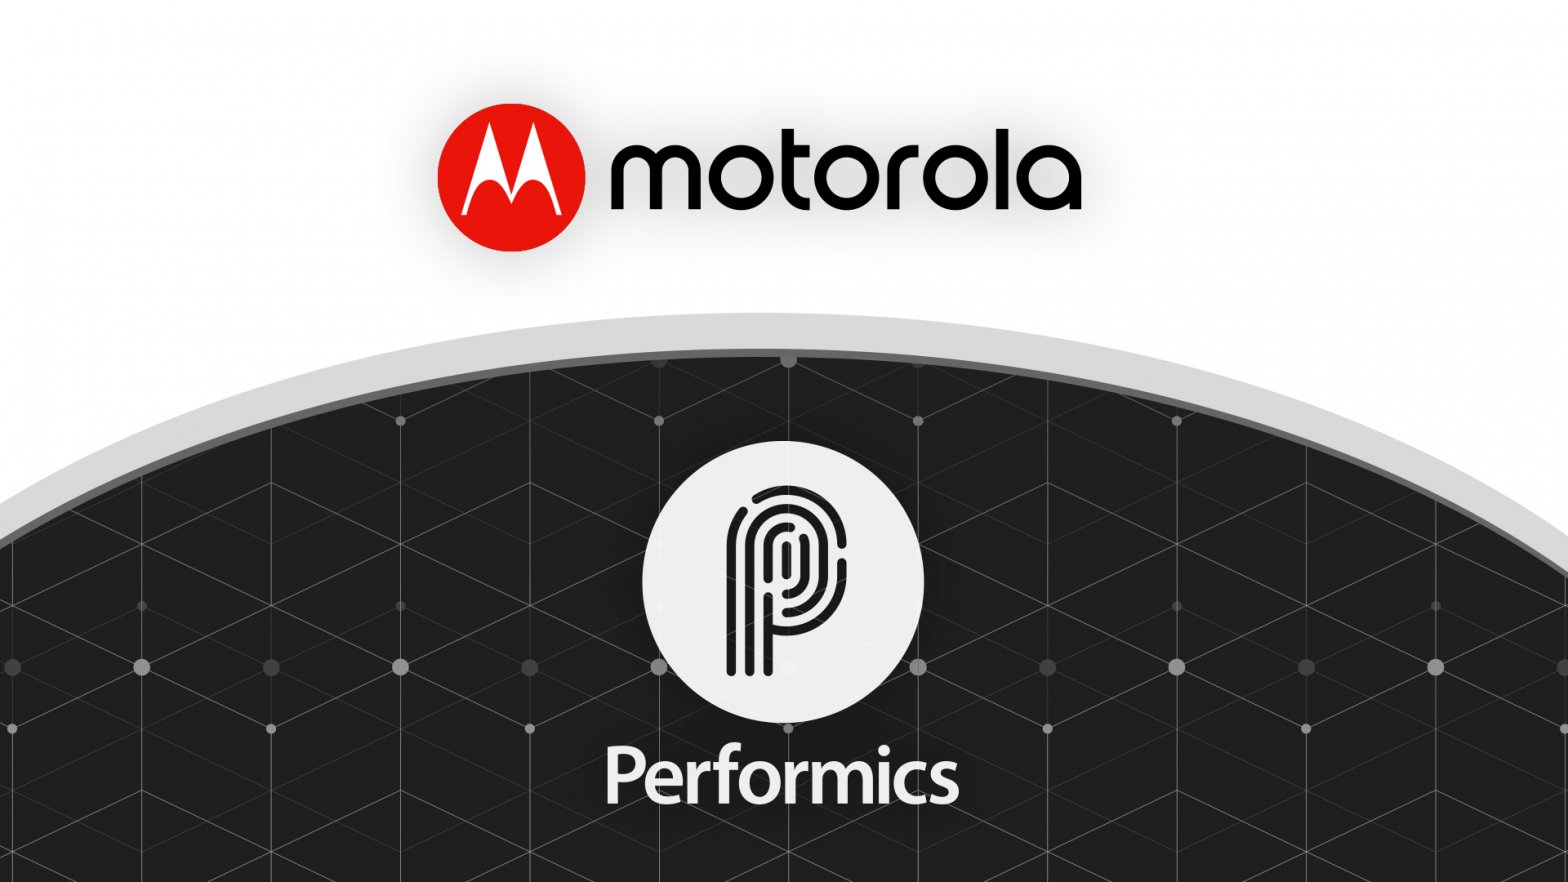 Case study: Performics + Motorola